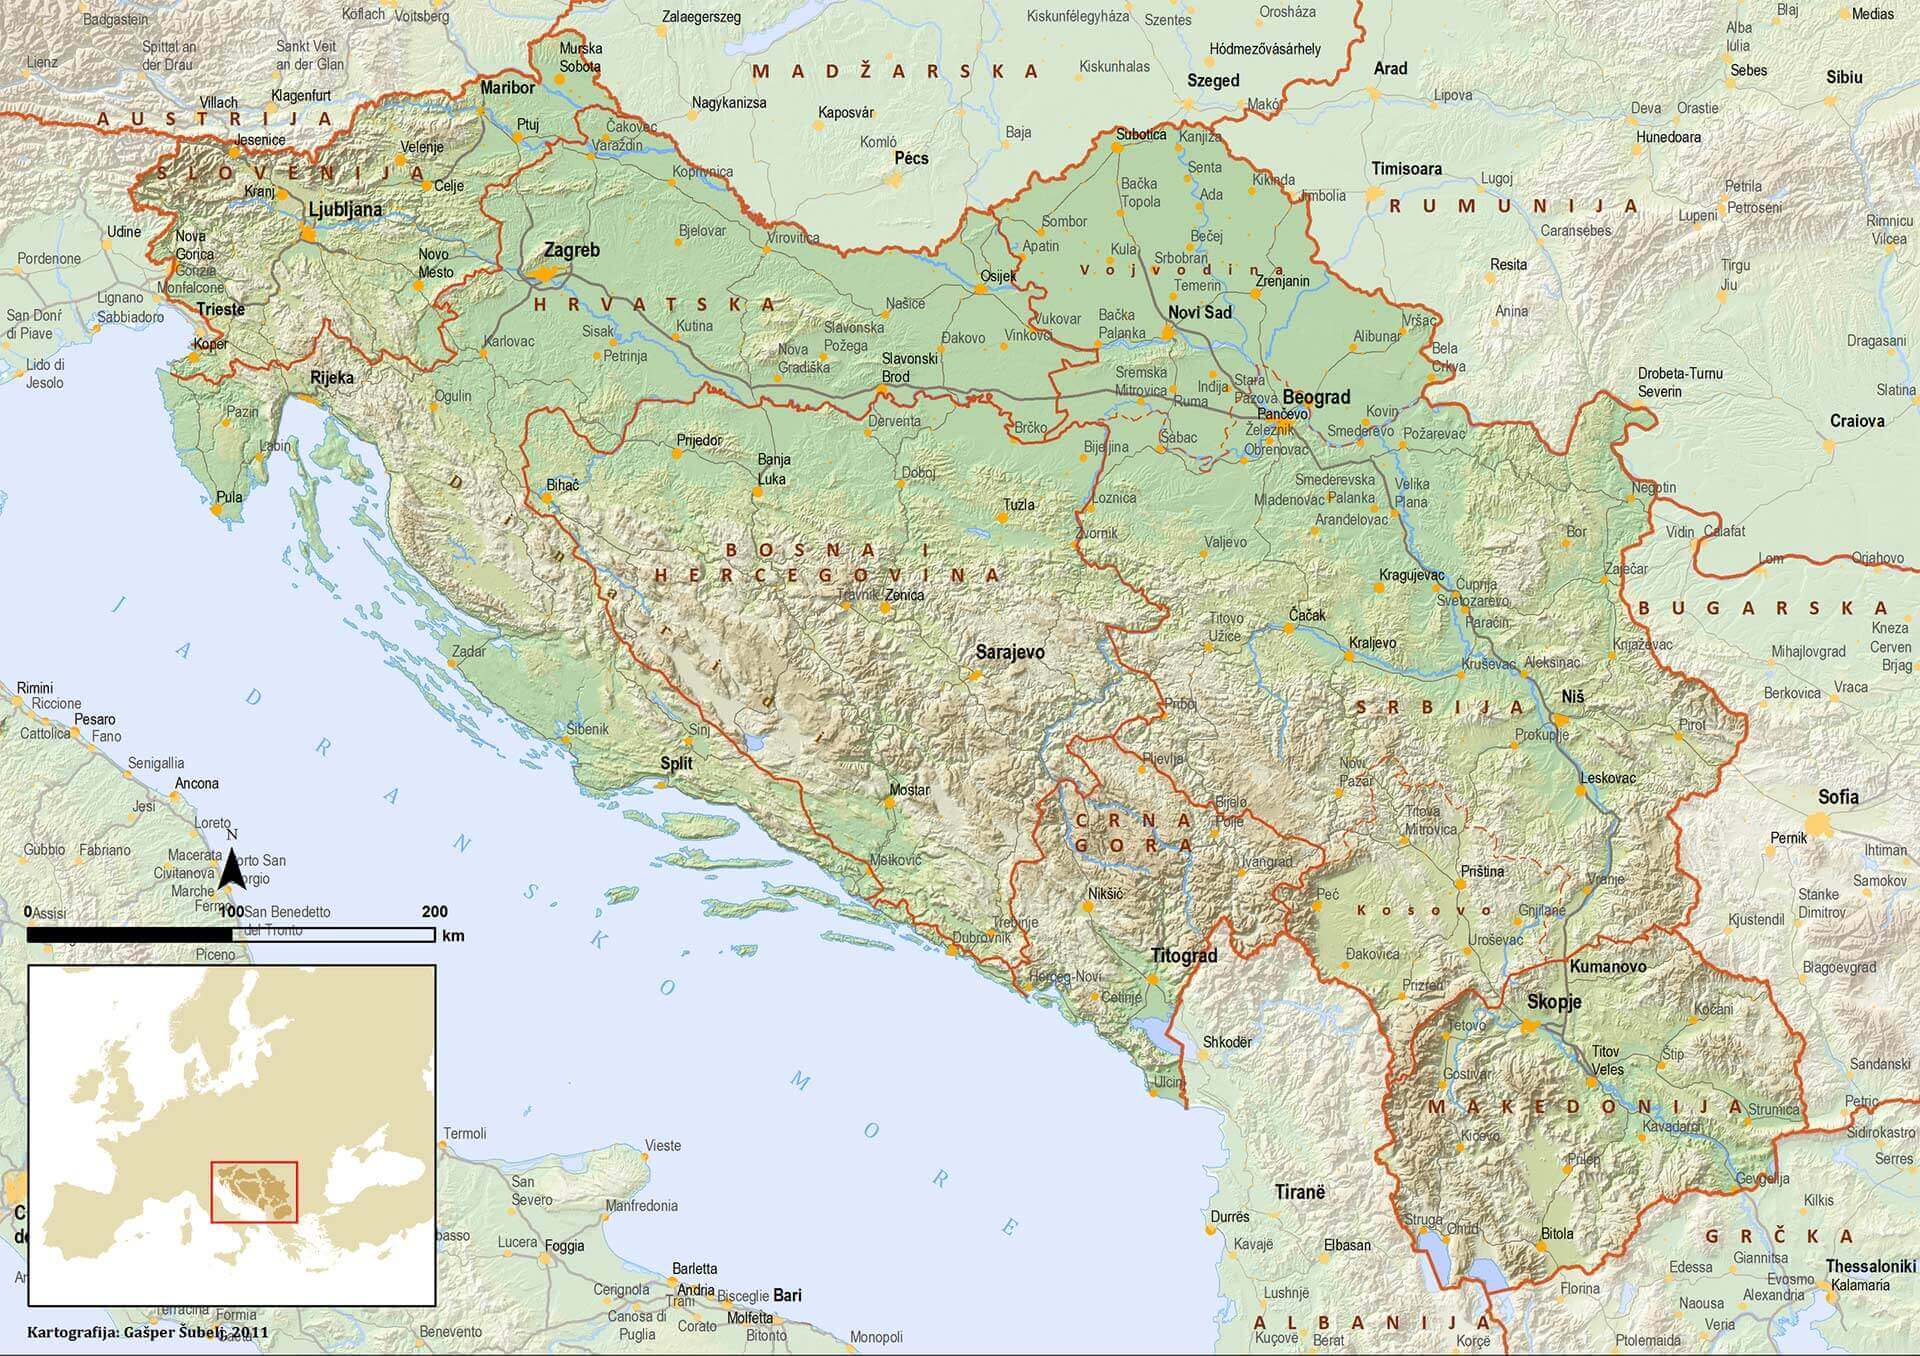 What Happened to Yugoslavia?